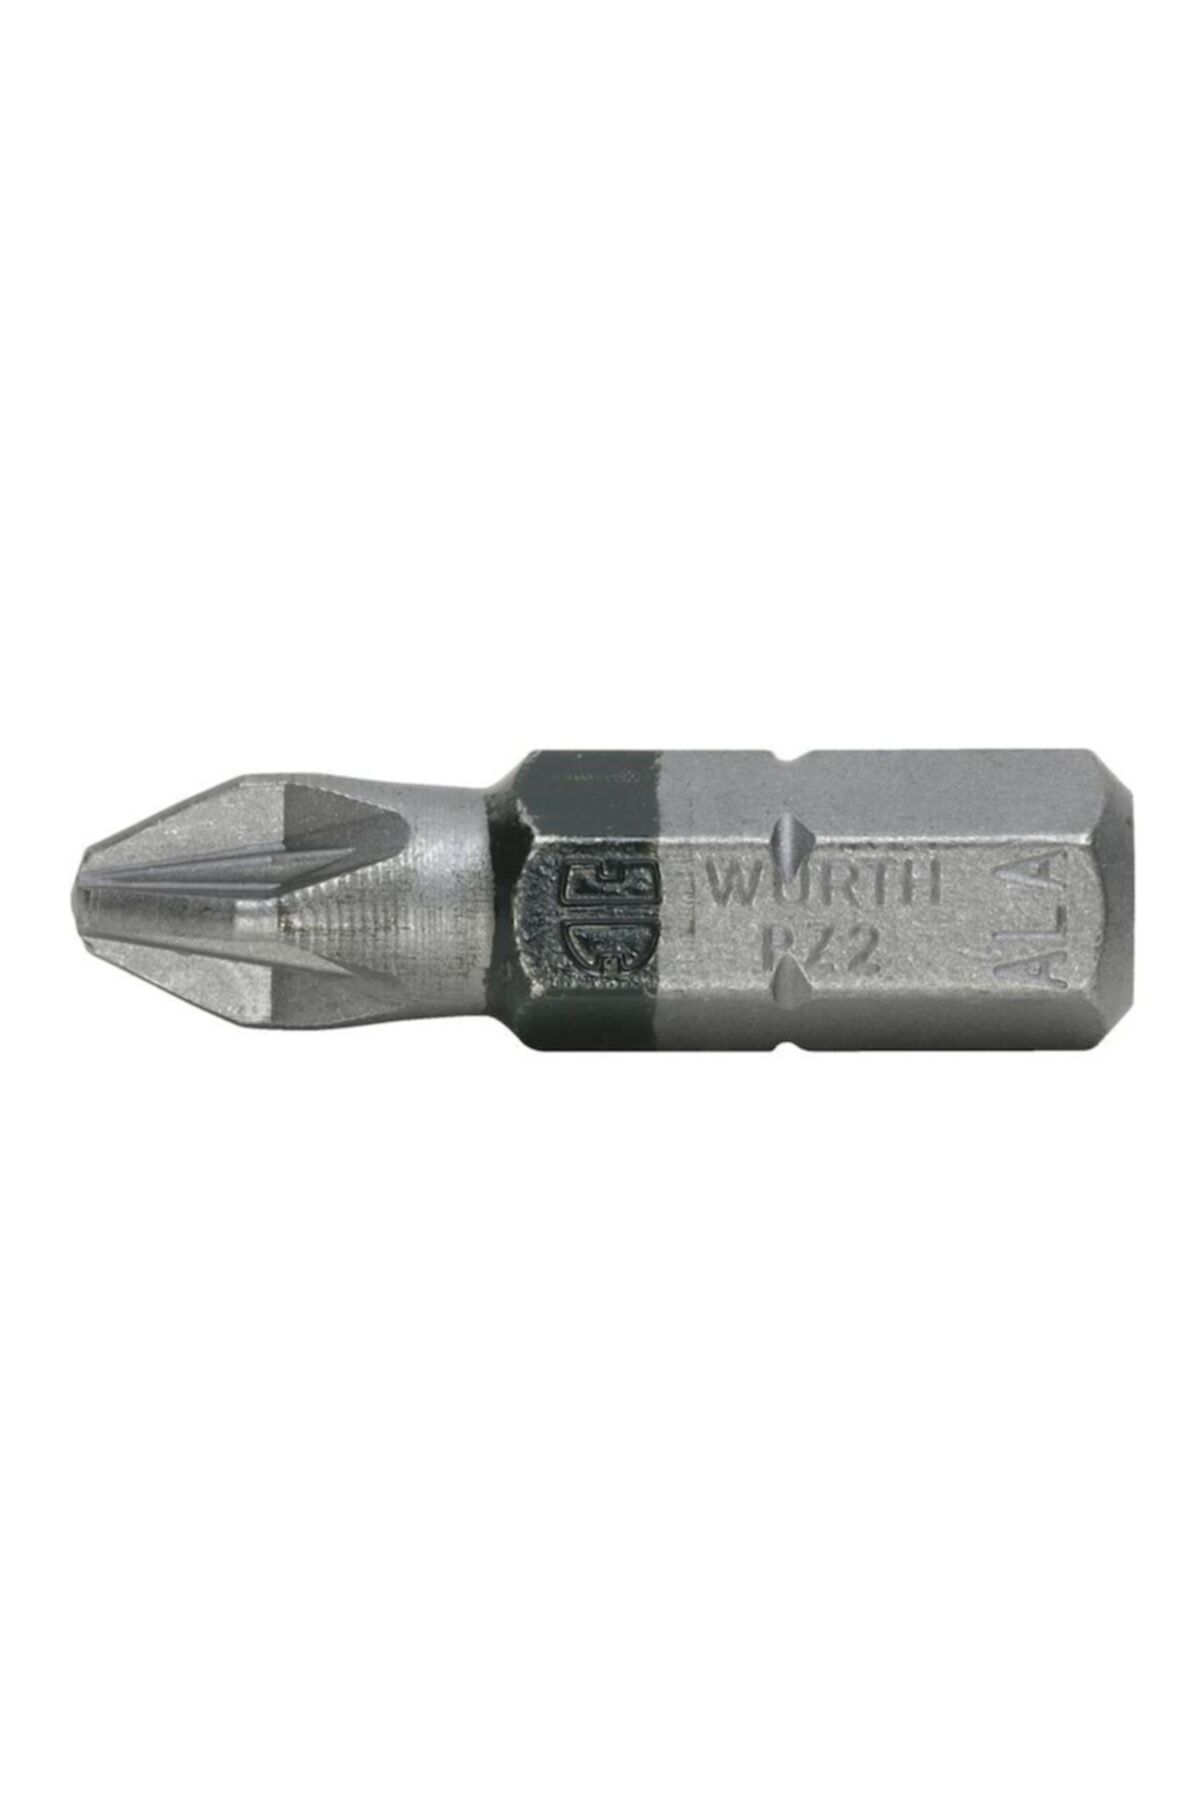 Würth Bits Uç-pz2-1/4ı-25mm 20 Adet